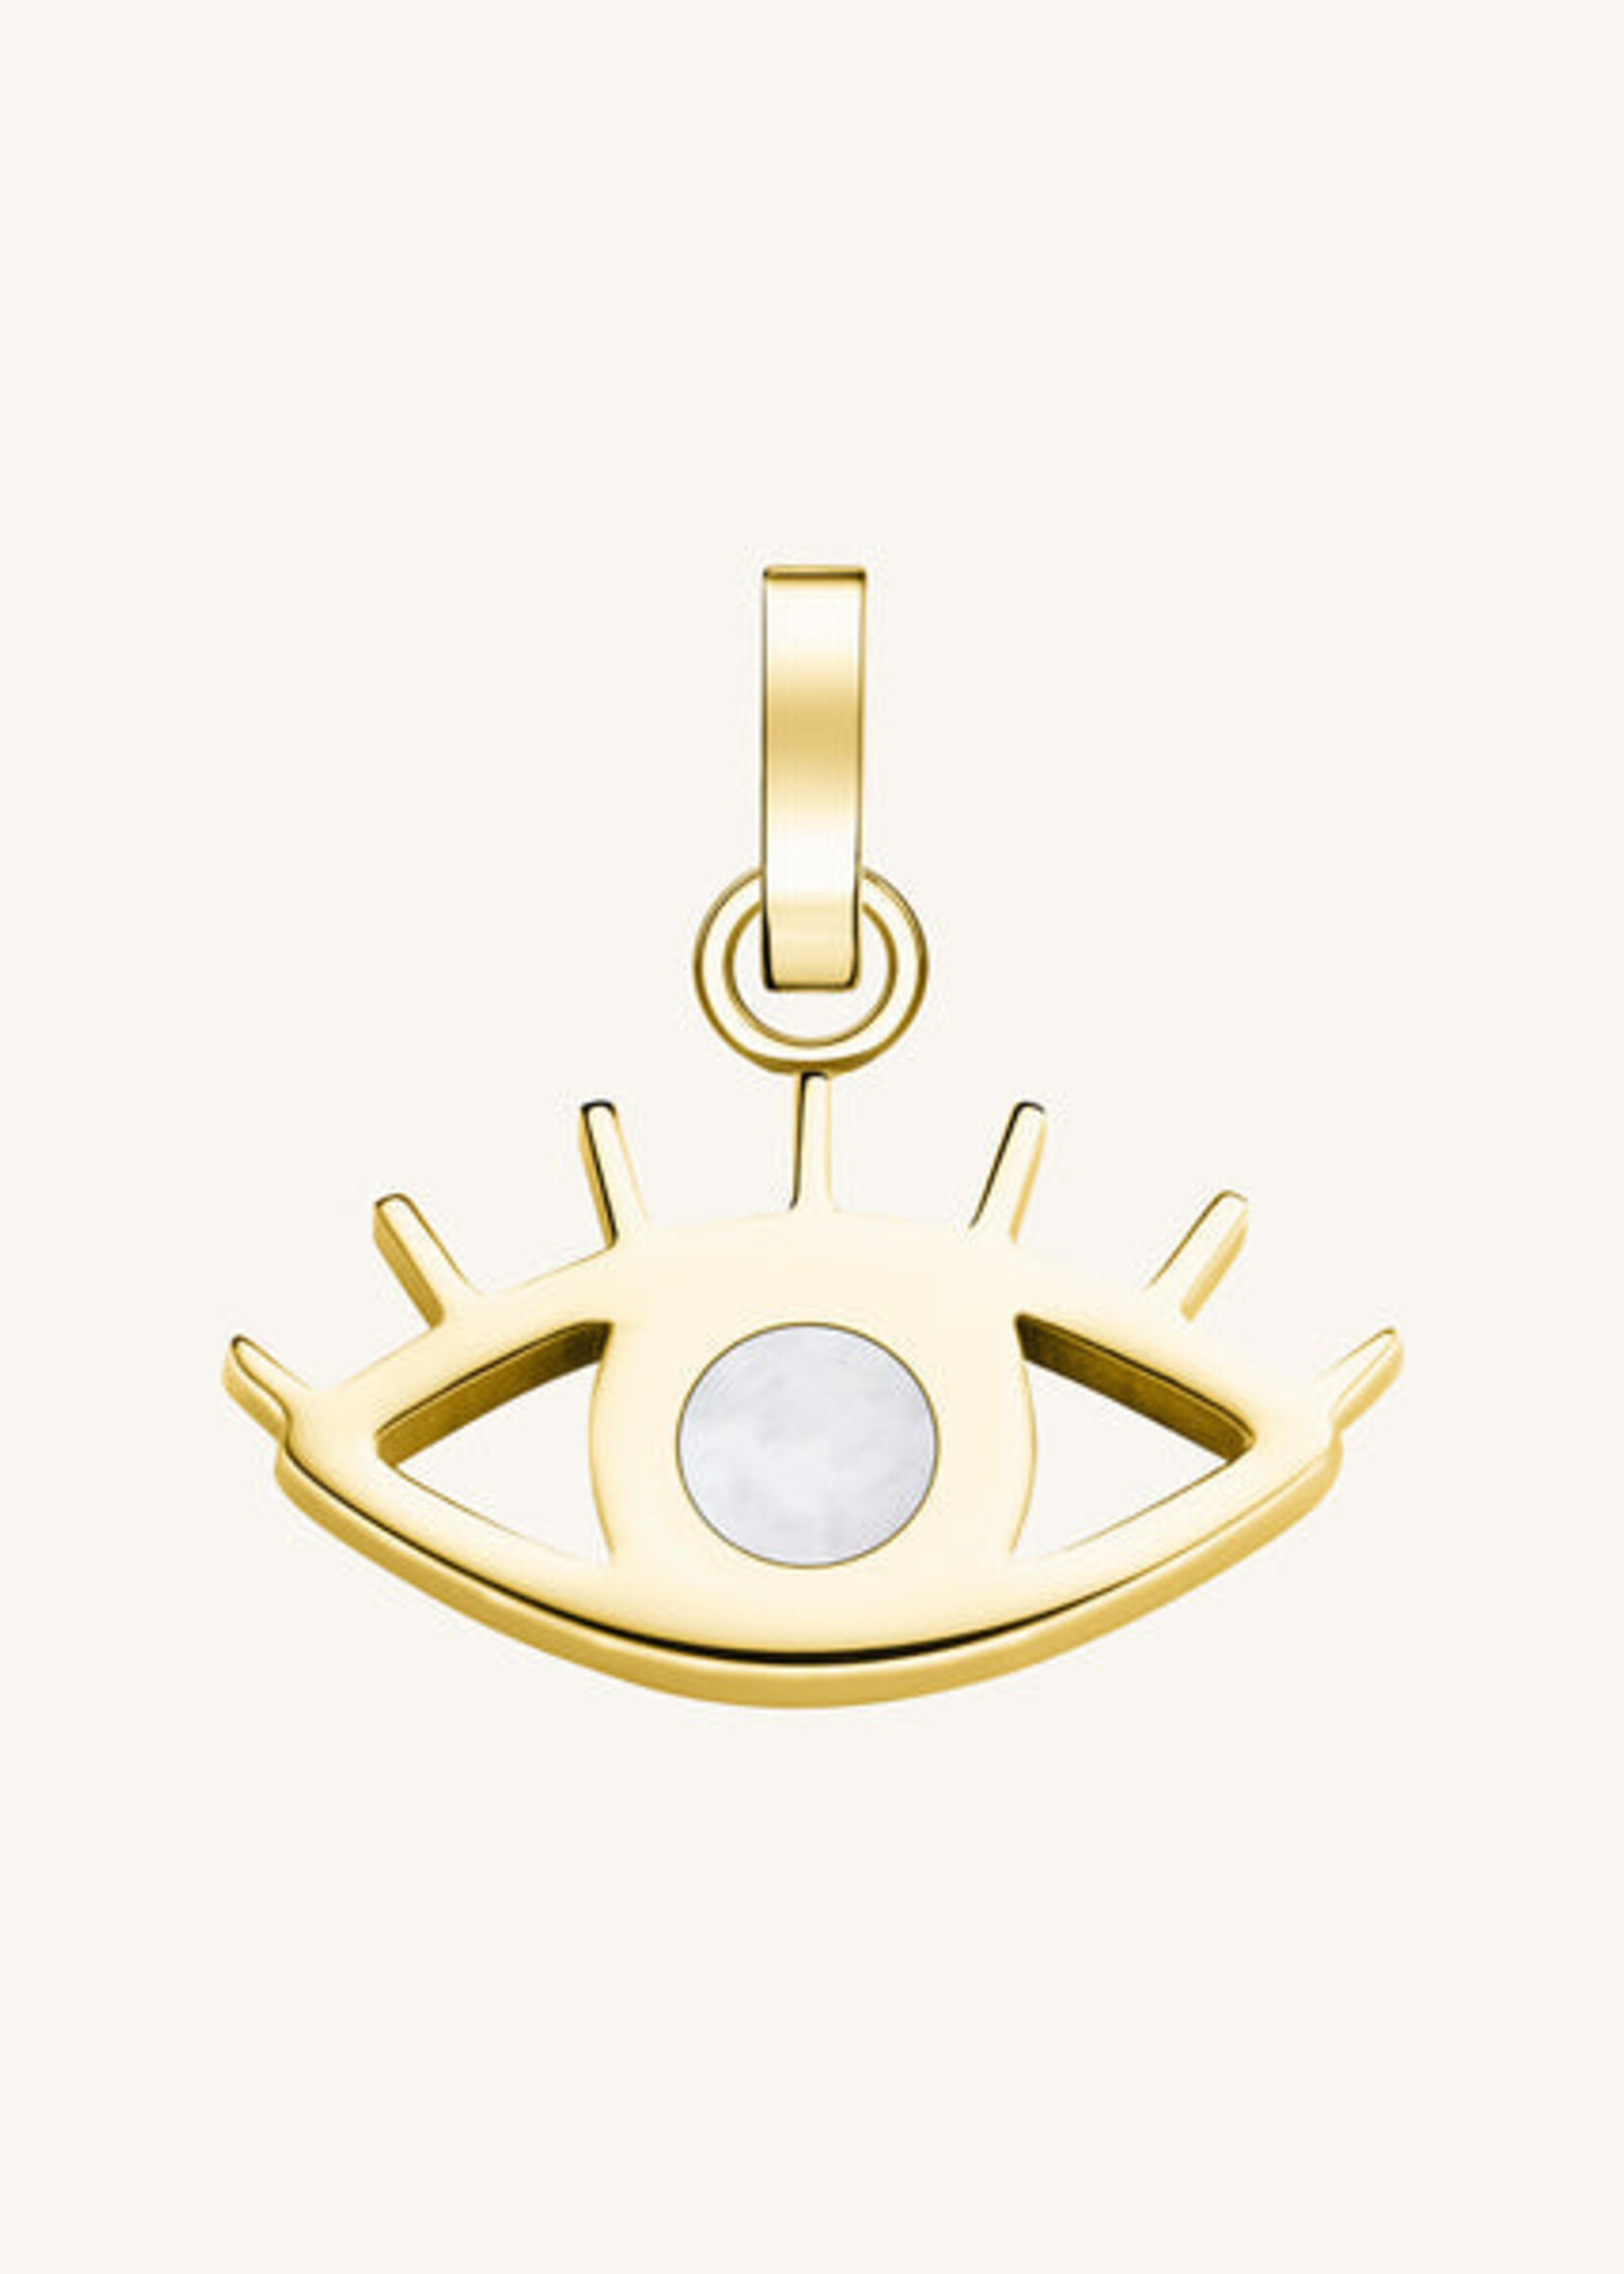 Rosefield pendant gold lucky symbol mop evil eye